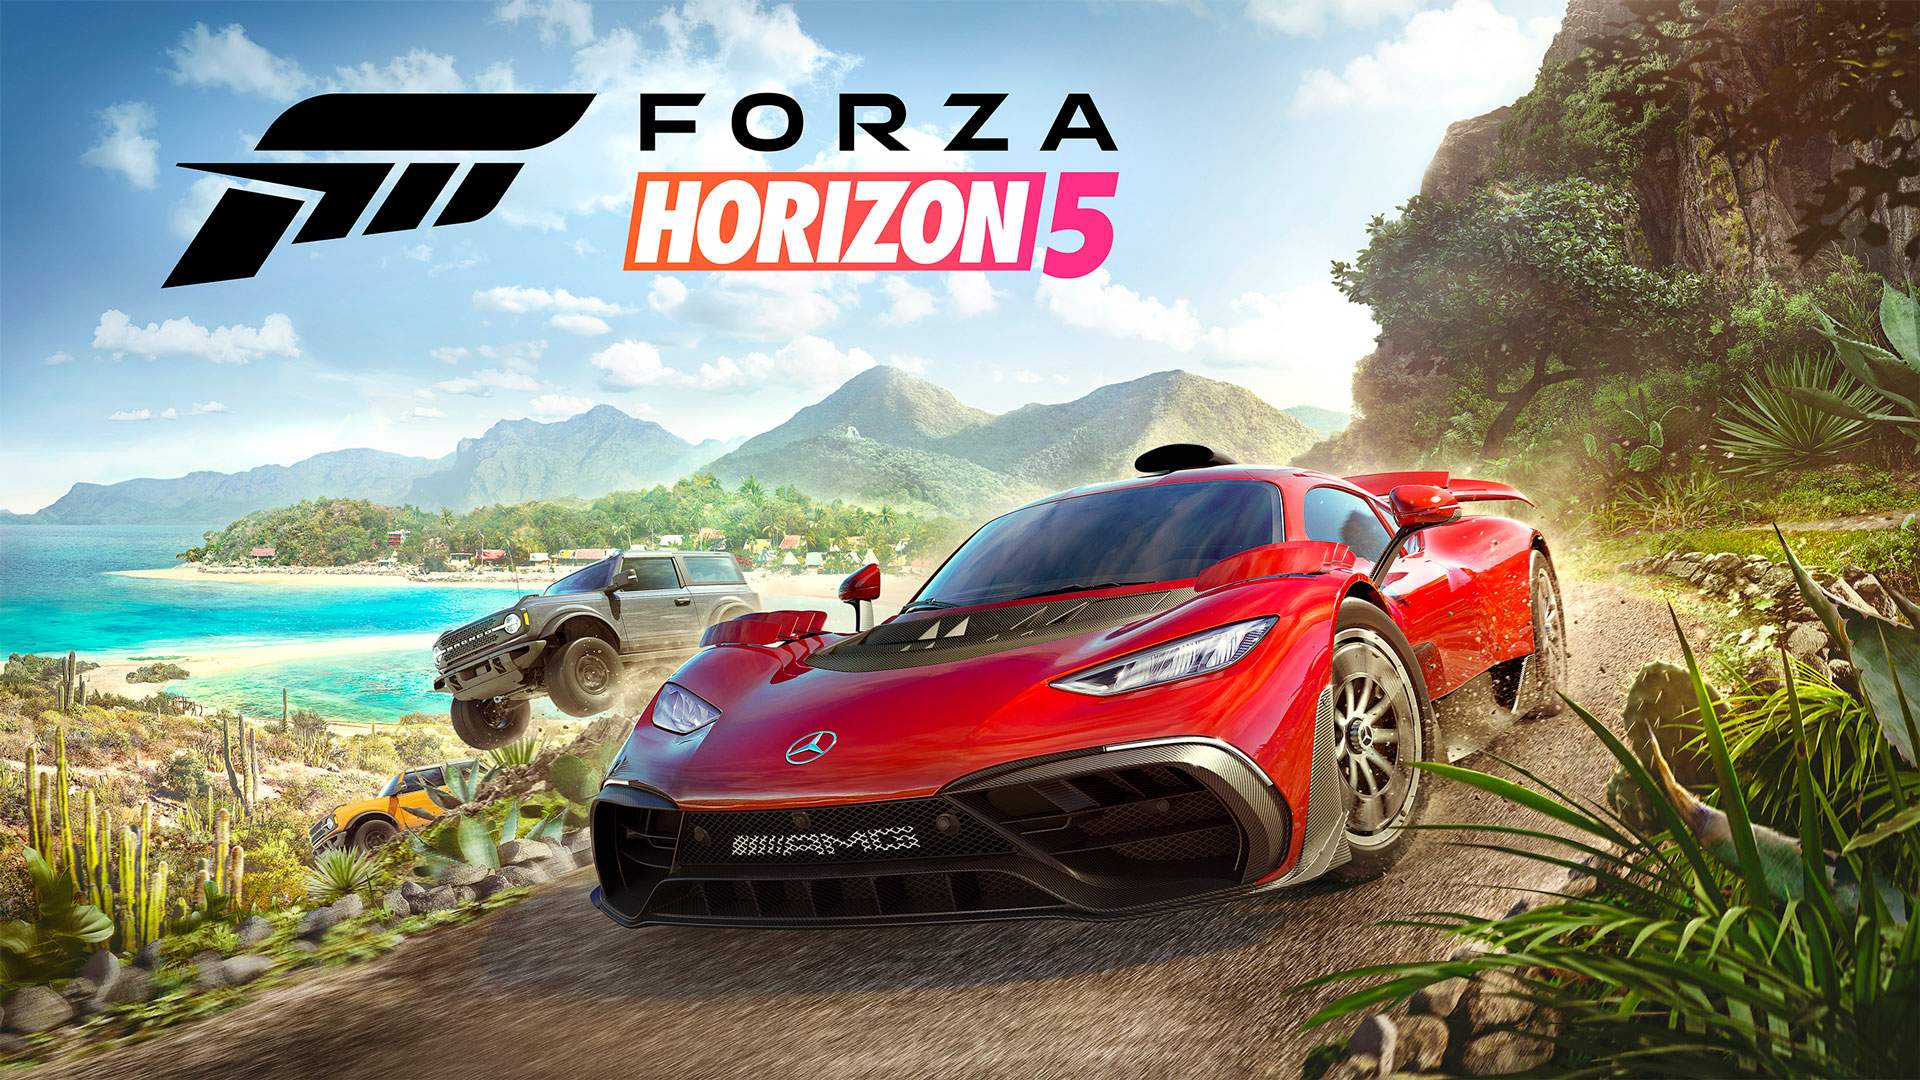 Forza Horizon 5 преодолела отметку в 30 миллионов игроков: с сайта NEWXBOXONE.RU